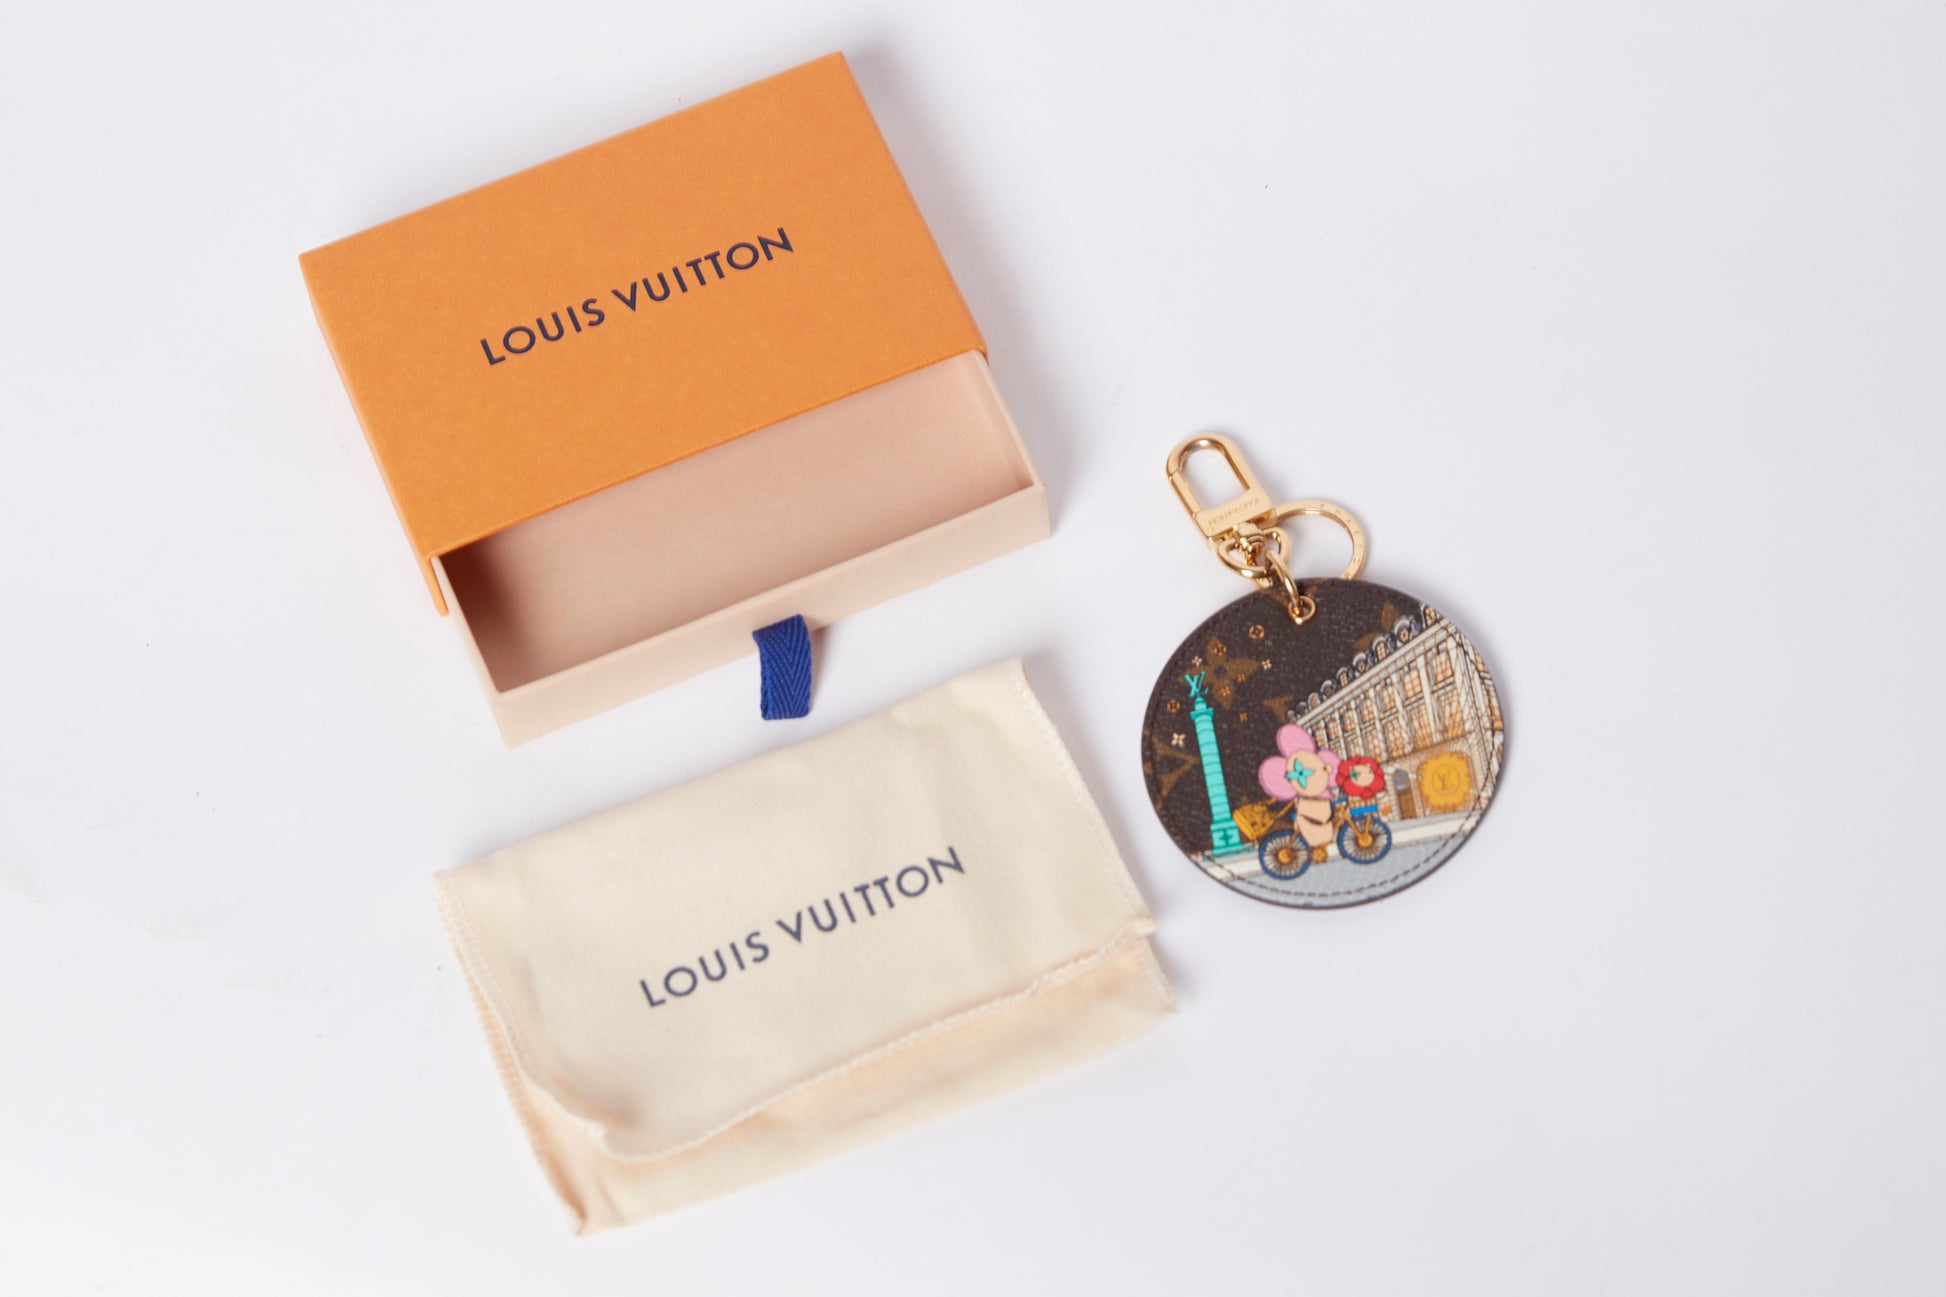 Louis Vuitton Christmas Animations 2022 